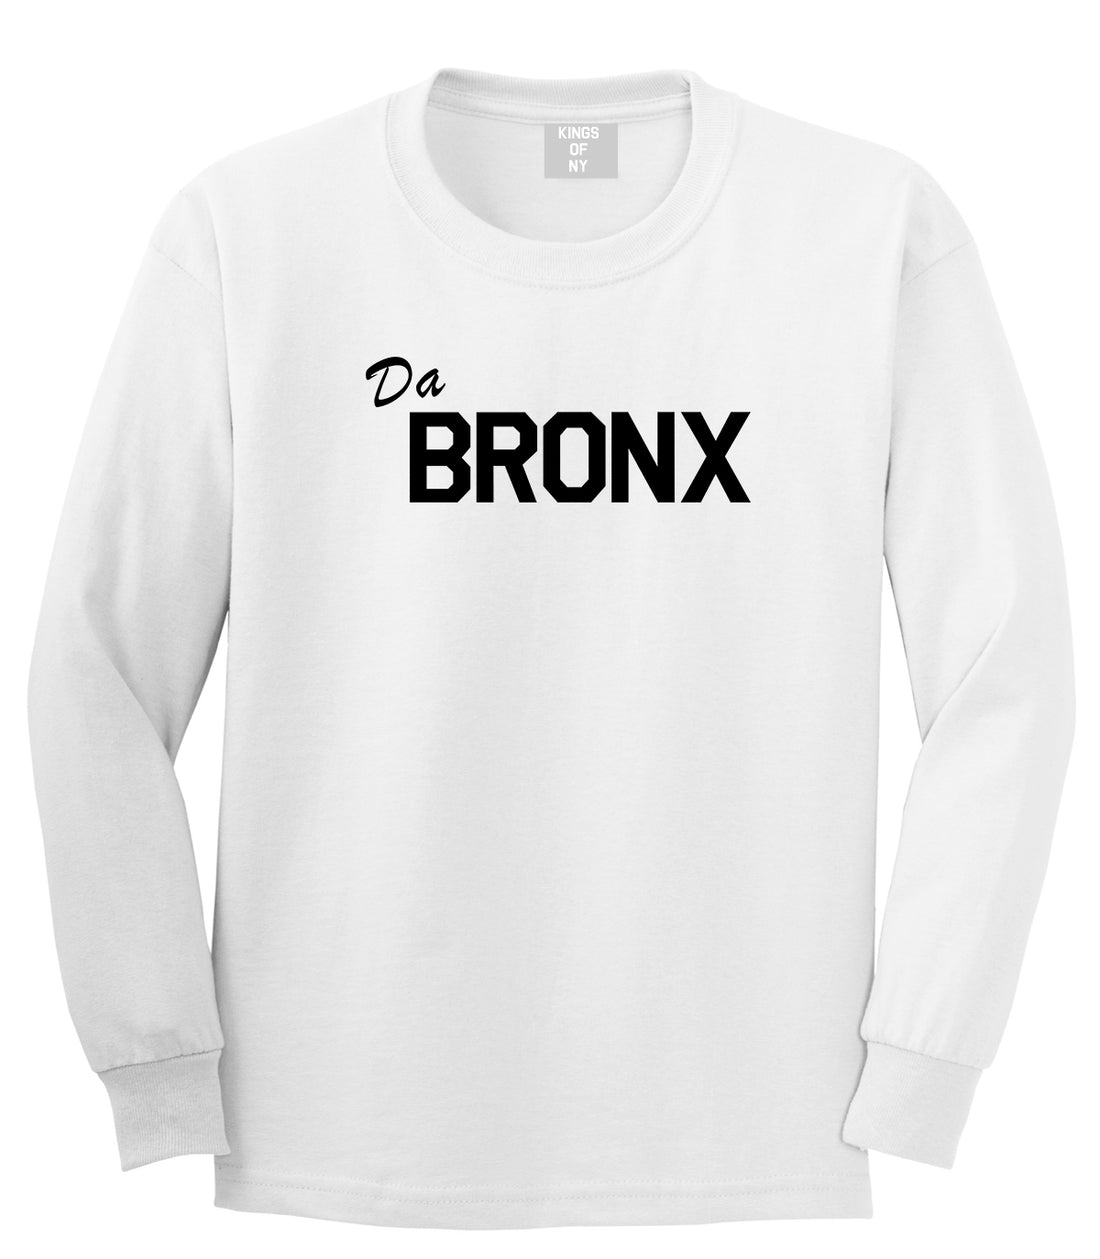 Da Bronx Mens Long Sleeve T-Shirt White by Kings Of NY